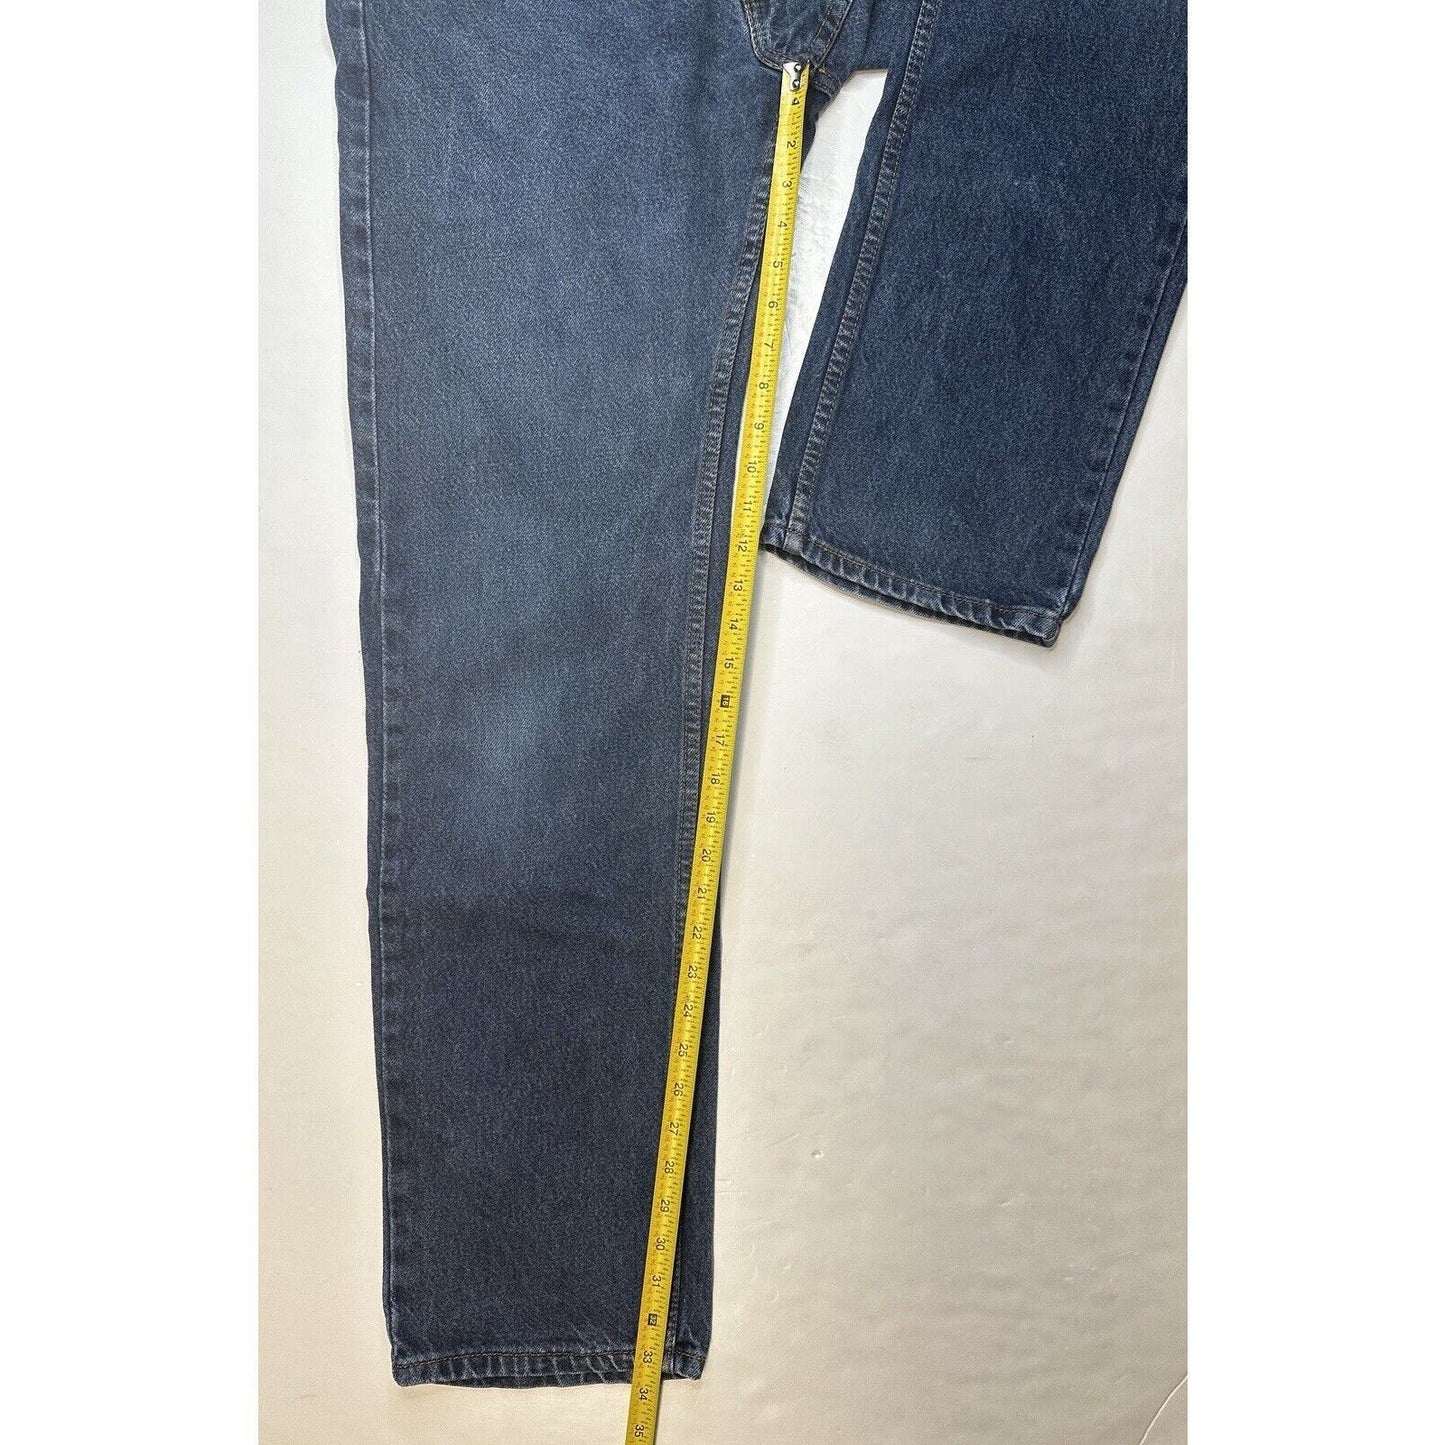 Levis 505 Jeans Mens 34x34 Blue Straight Leg Denim Dark Wash 100% Cotton Classic